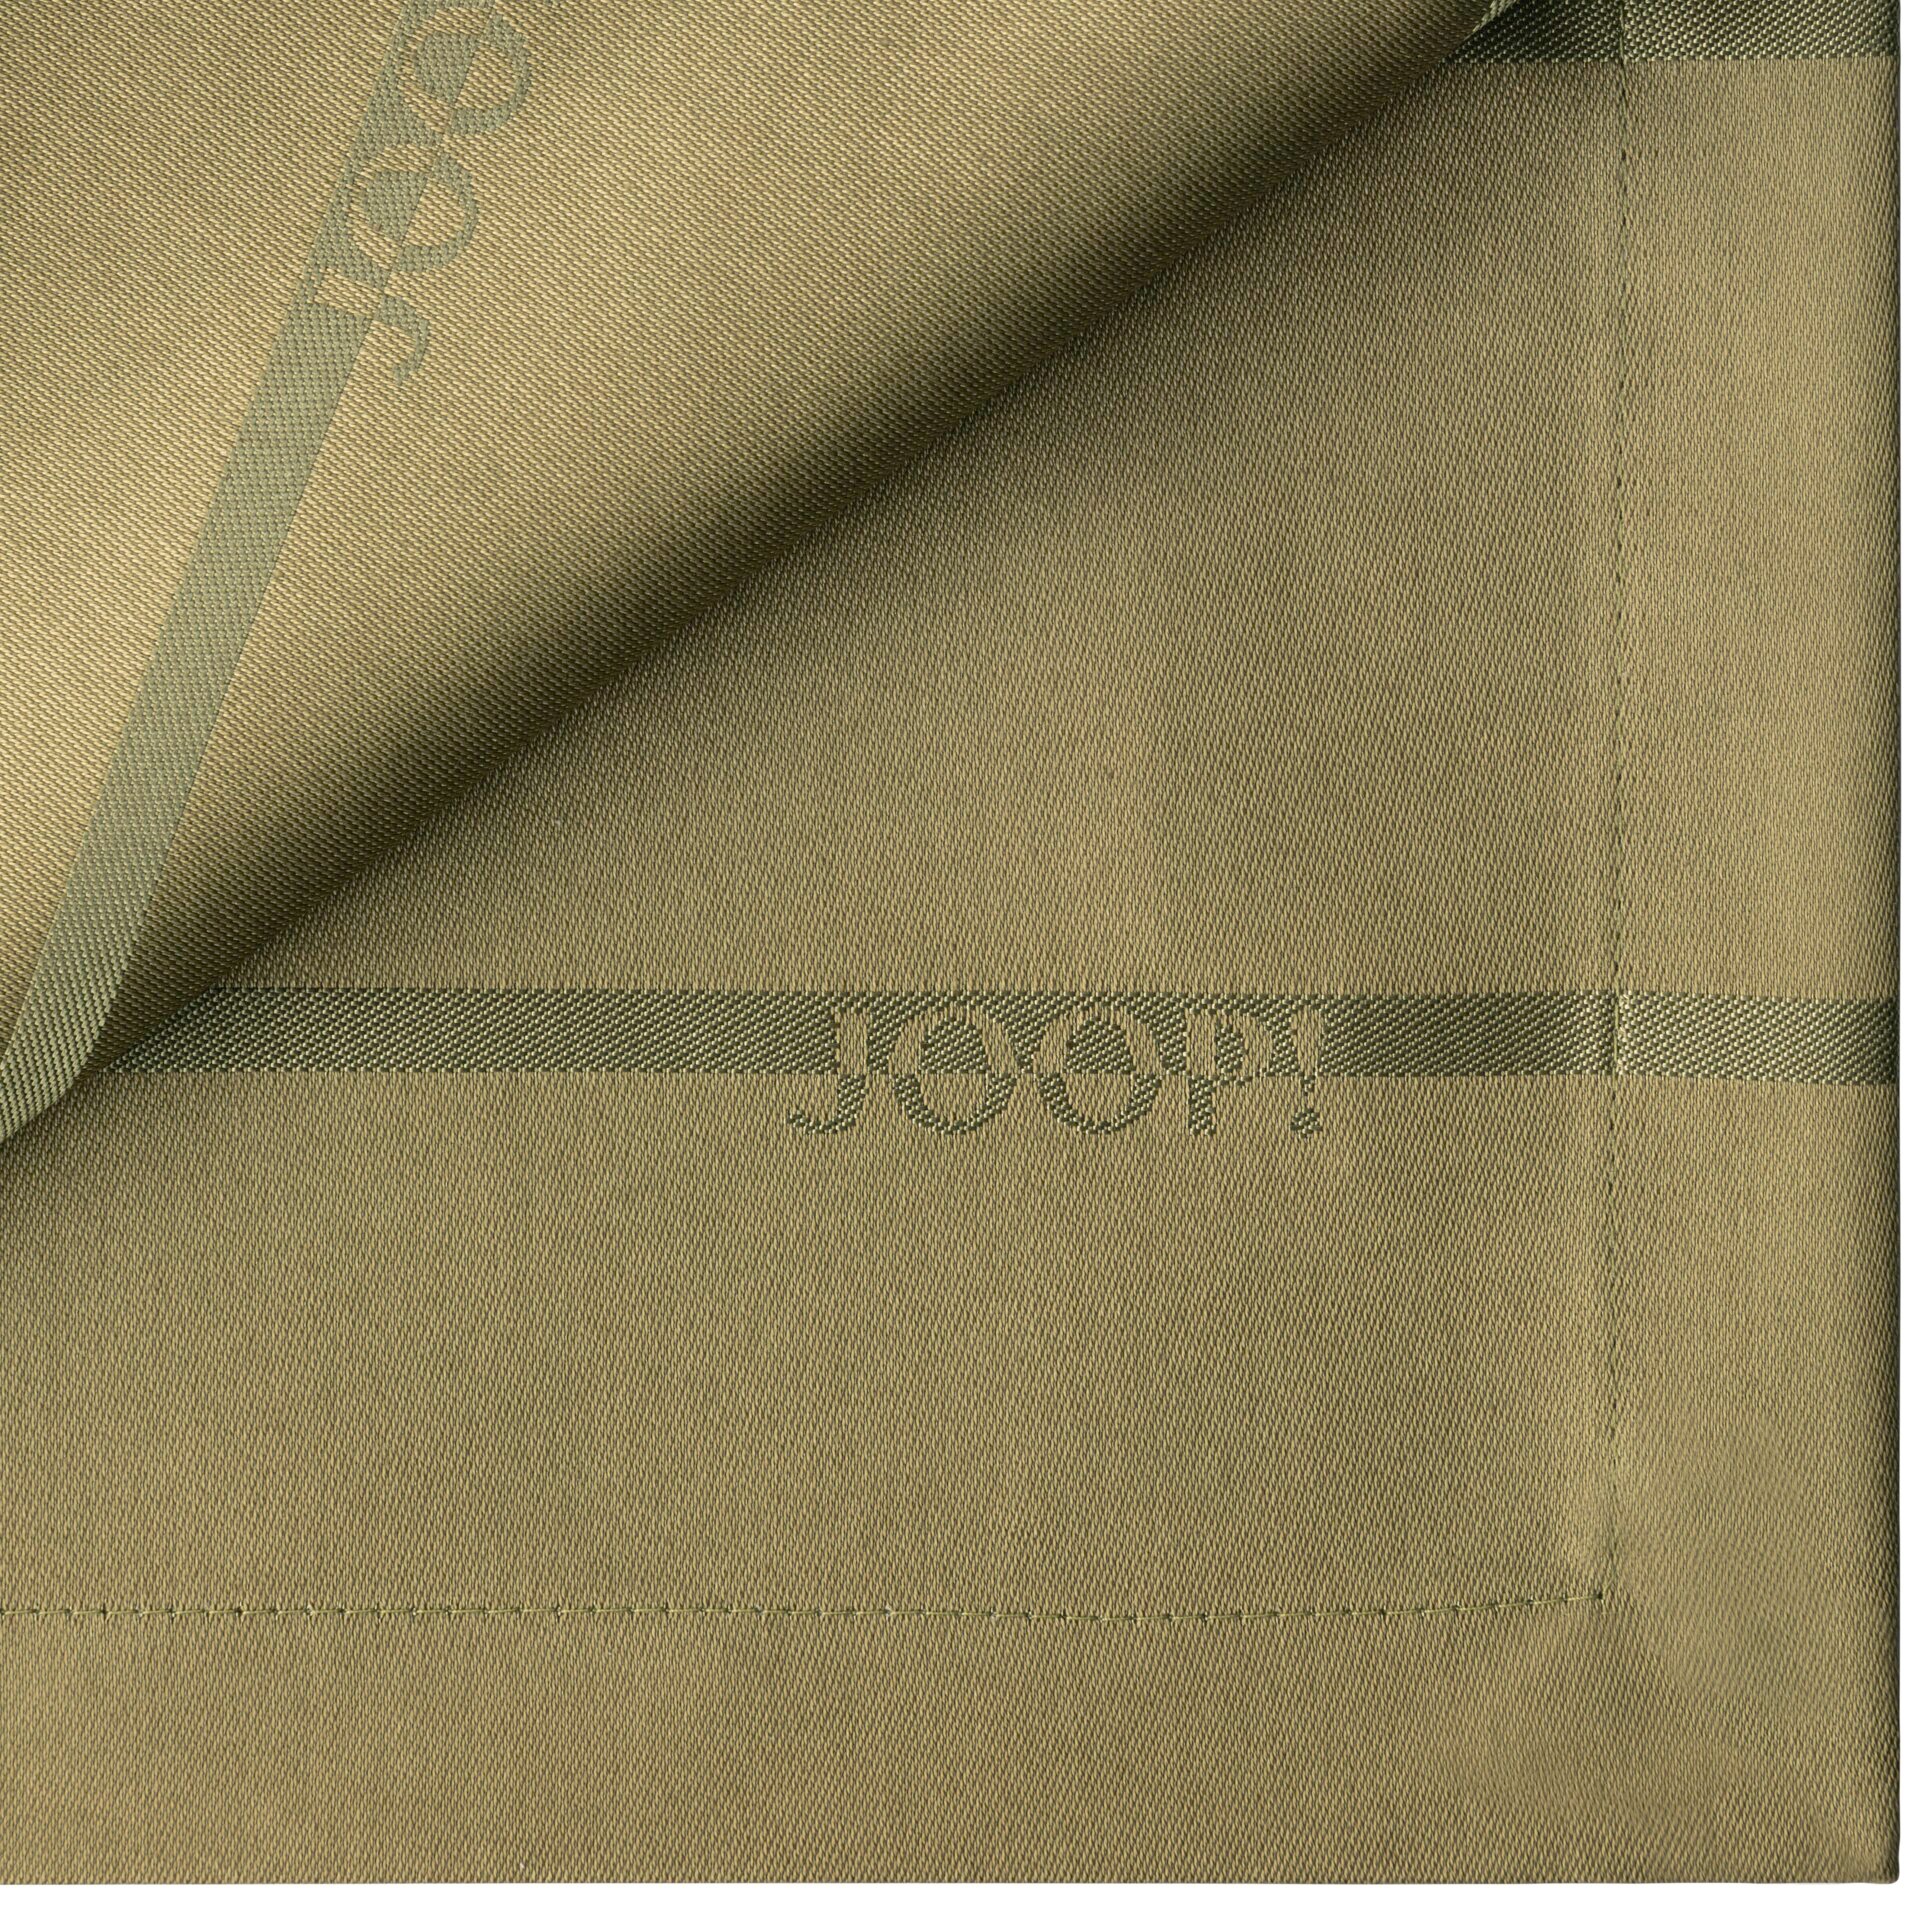 JOOP! Platzset »LOGO STRIPES«, (Set, 2 St.), mit elegantem JOOP! Logo-Muster im Streifen-Design, 36x48 cm